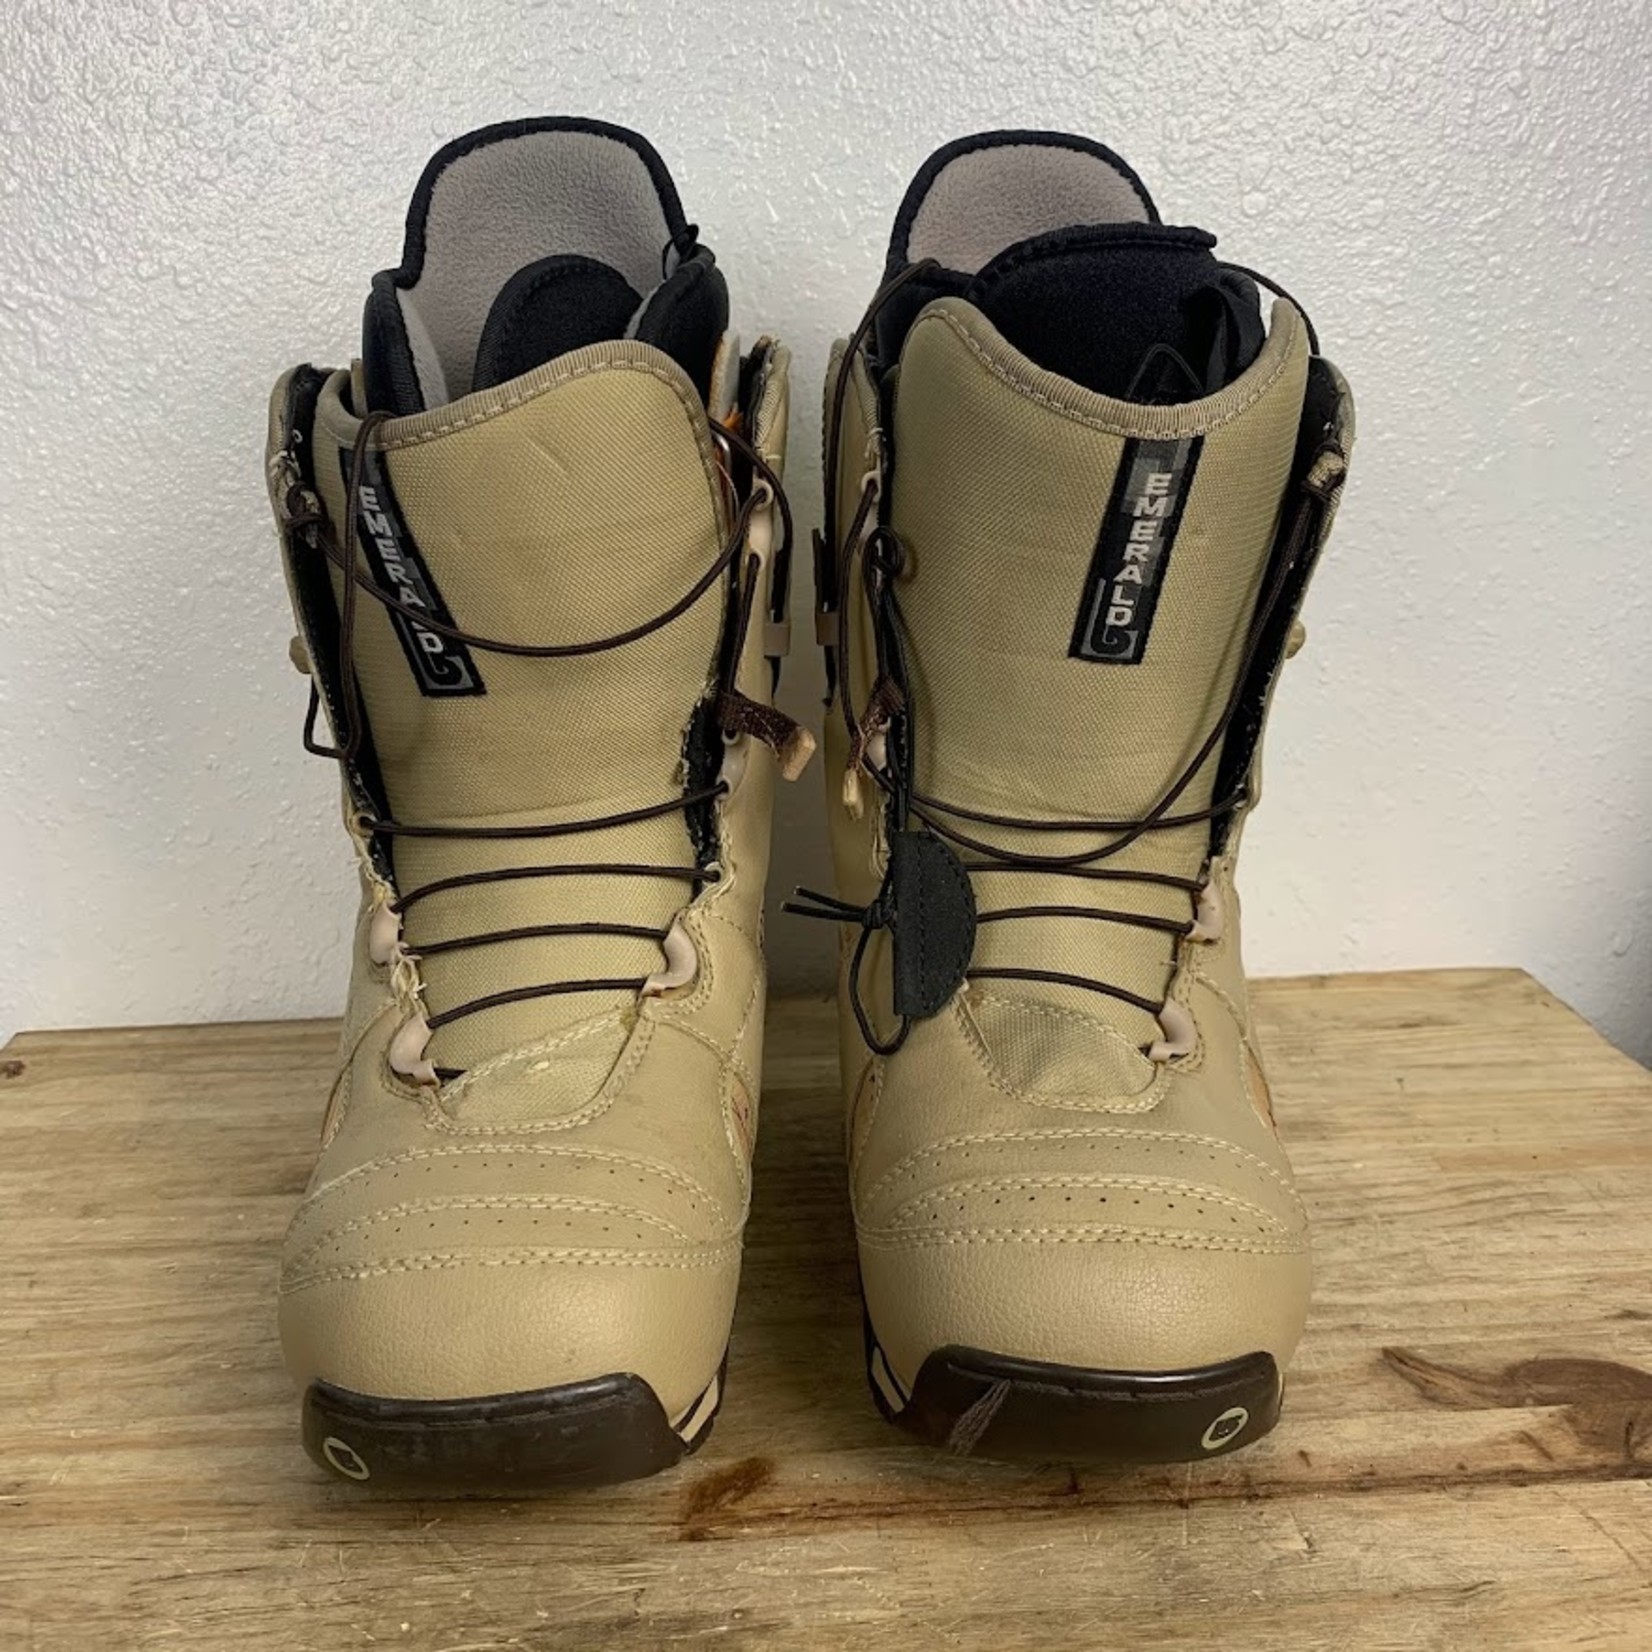 Burton Burton Emerald Snowboard Boots, Size 8 WMNS